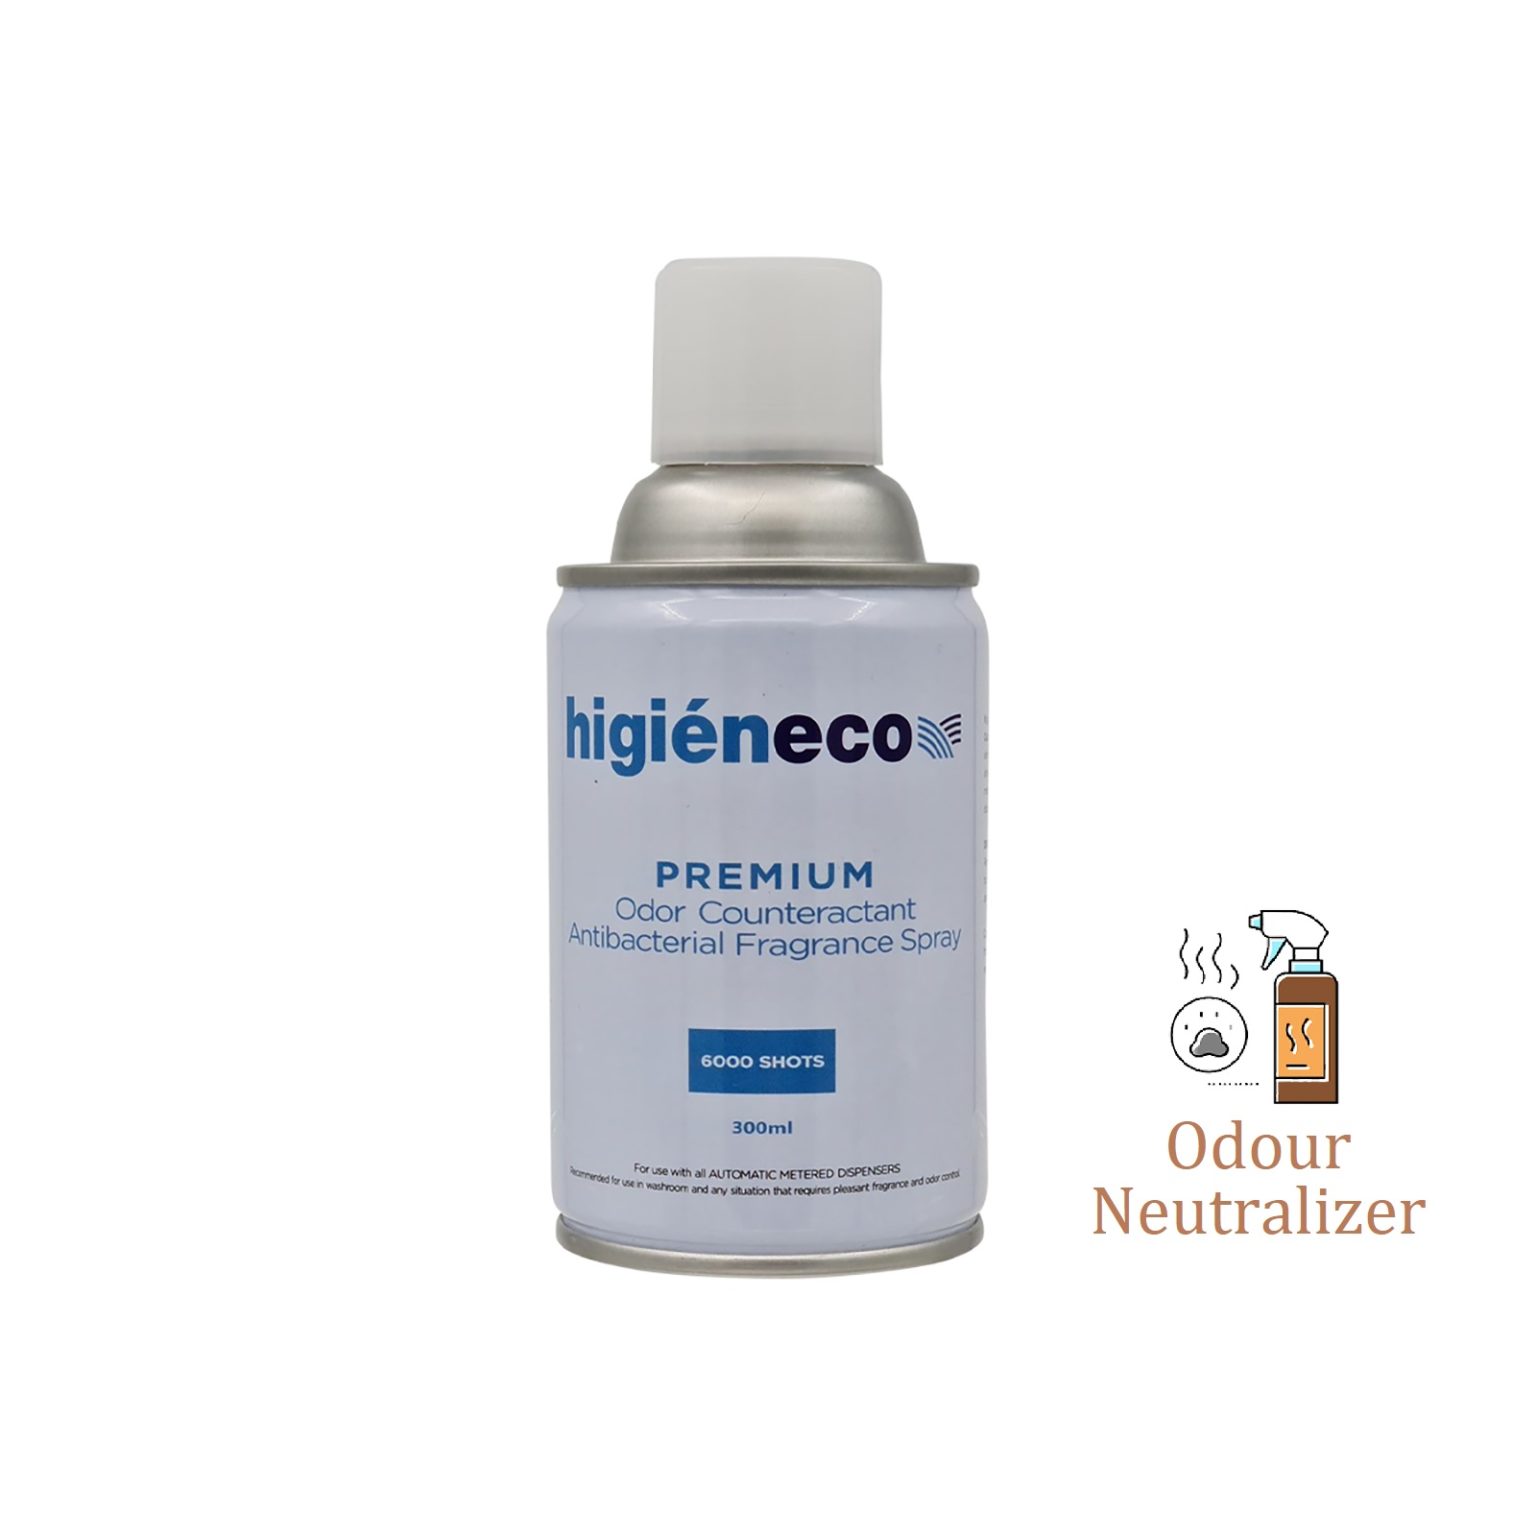 07756-Higieneco-Odour-Neutralizer-Automatic-Spray-Air-Freshener-Fragrance-Refill-Antibacterial-Aerosol-Can-Cap-300mL